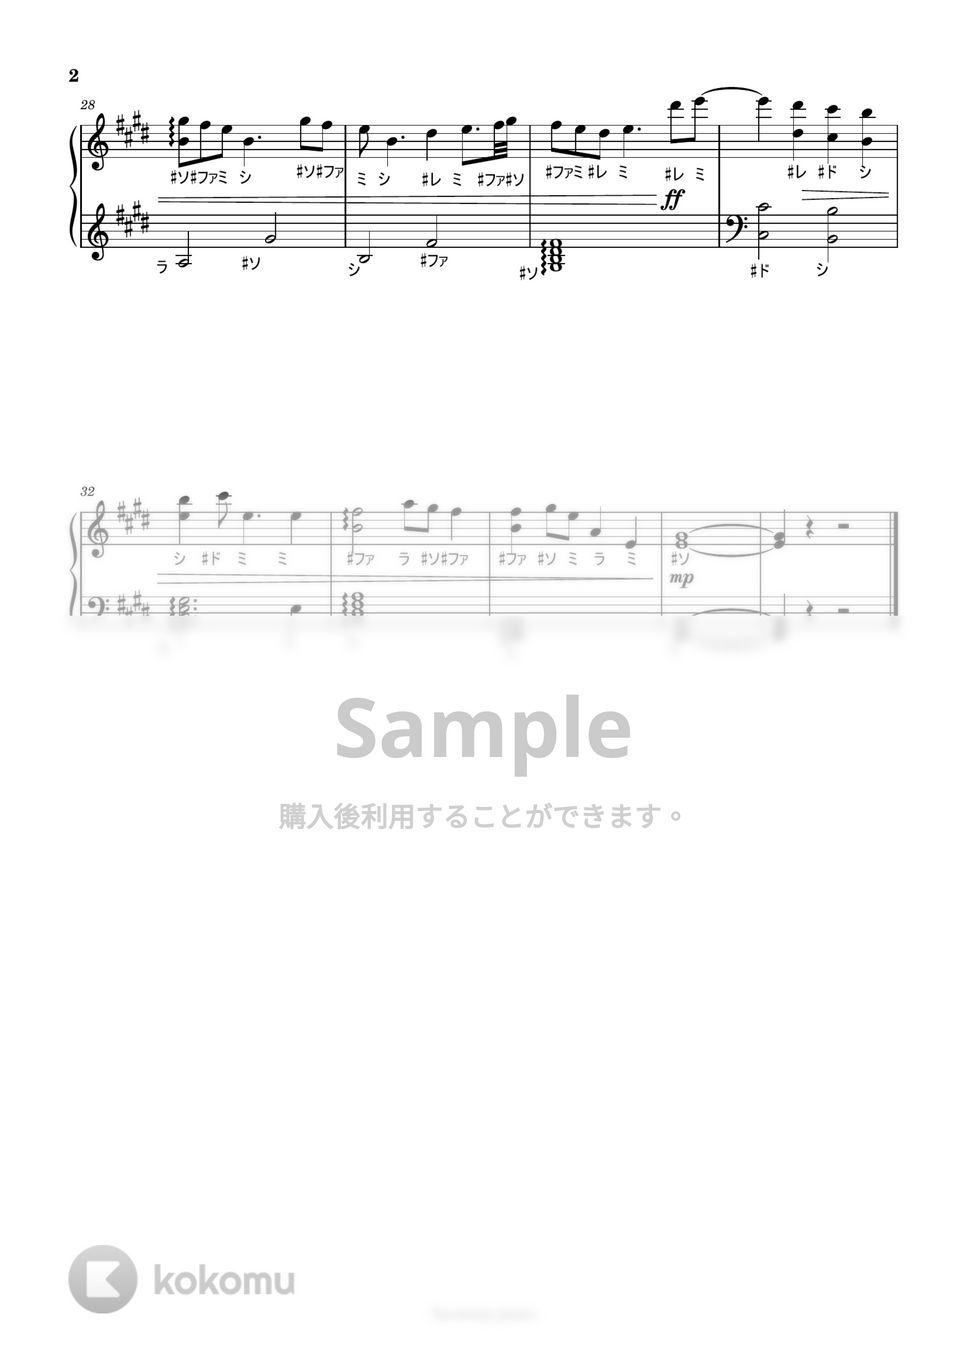 silent - [ドレミ付２曲]silent snow ゆっくりメインテーマとCM曲 (2曲セット) by harmony piano